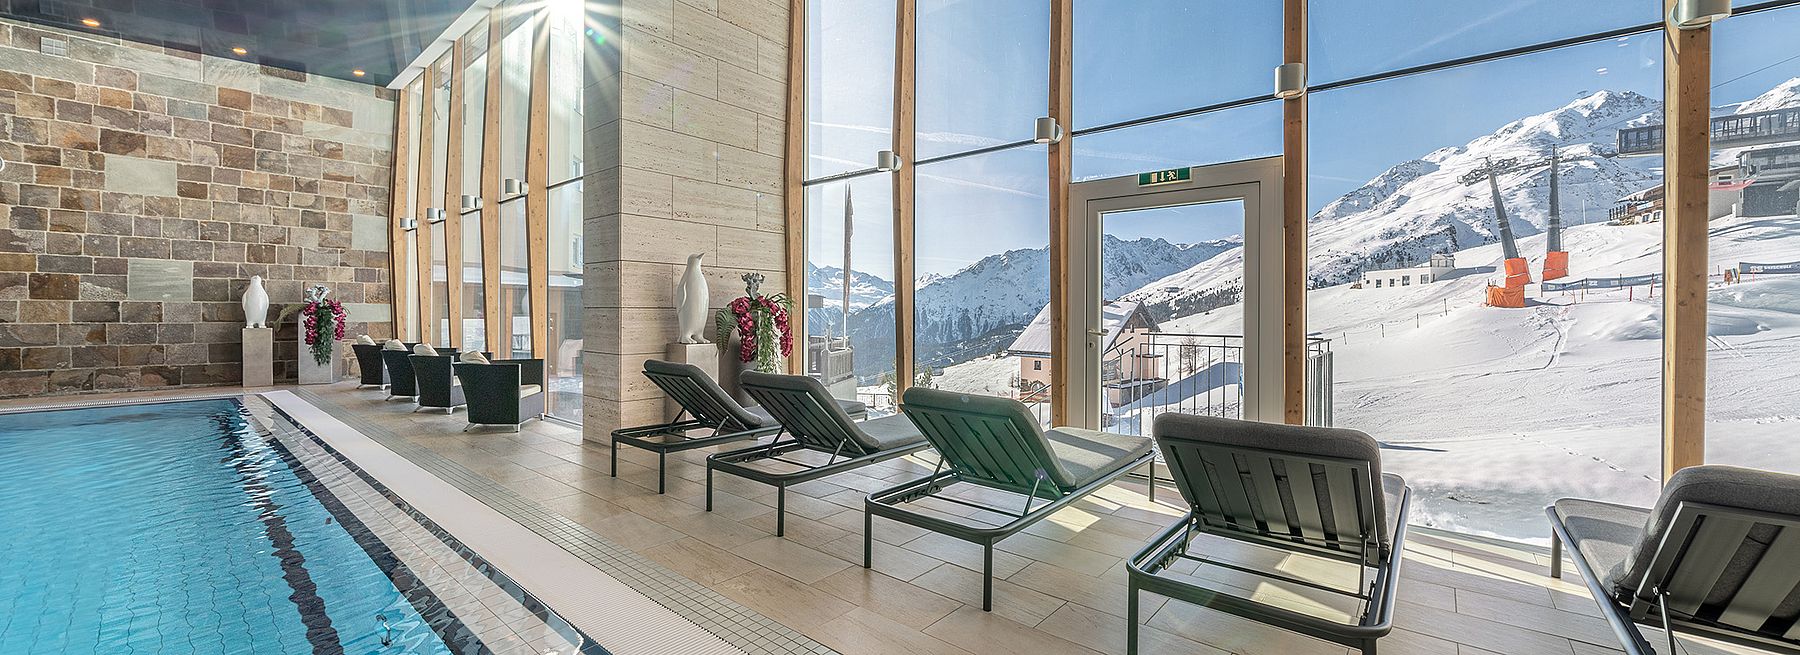 Ski Hotel Edelweiss in Hochsölden Pool